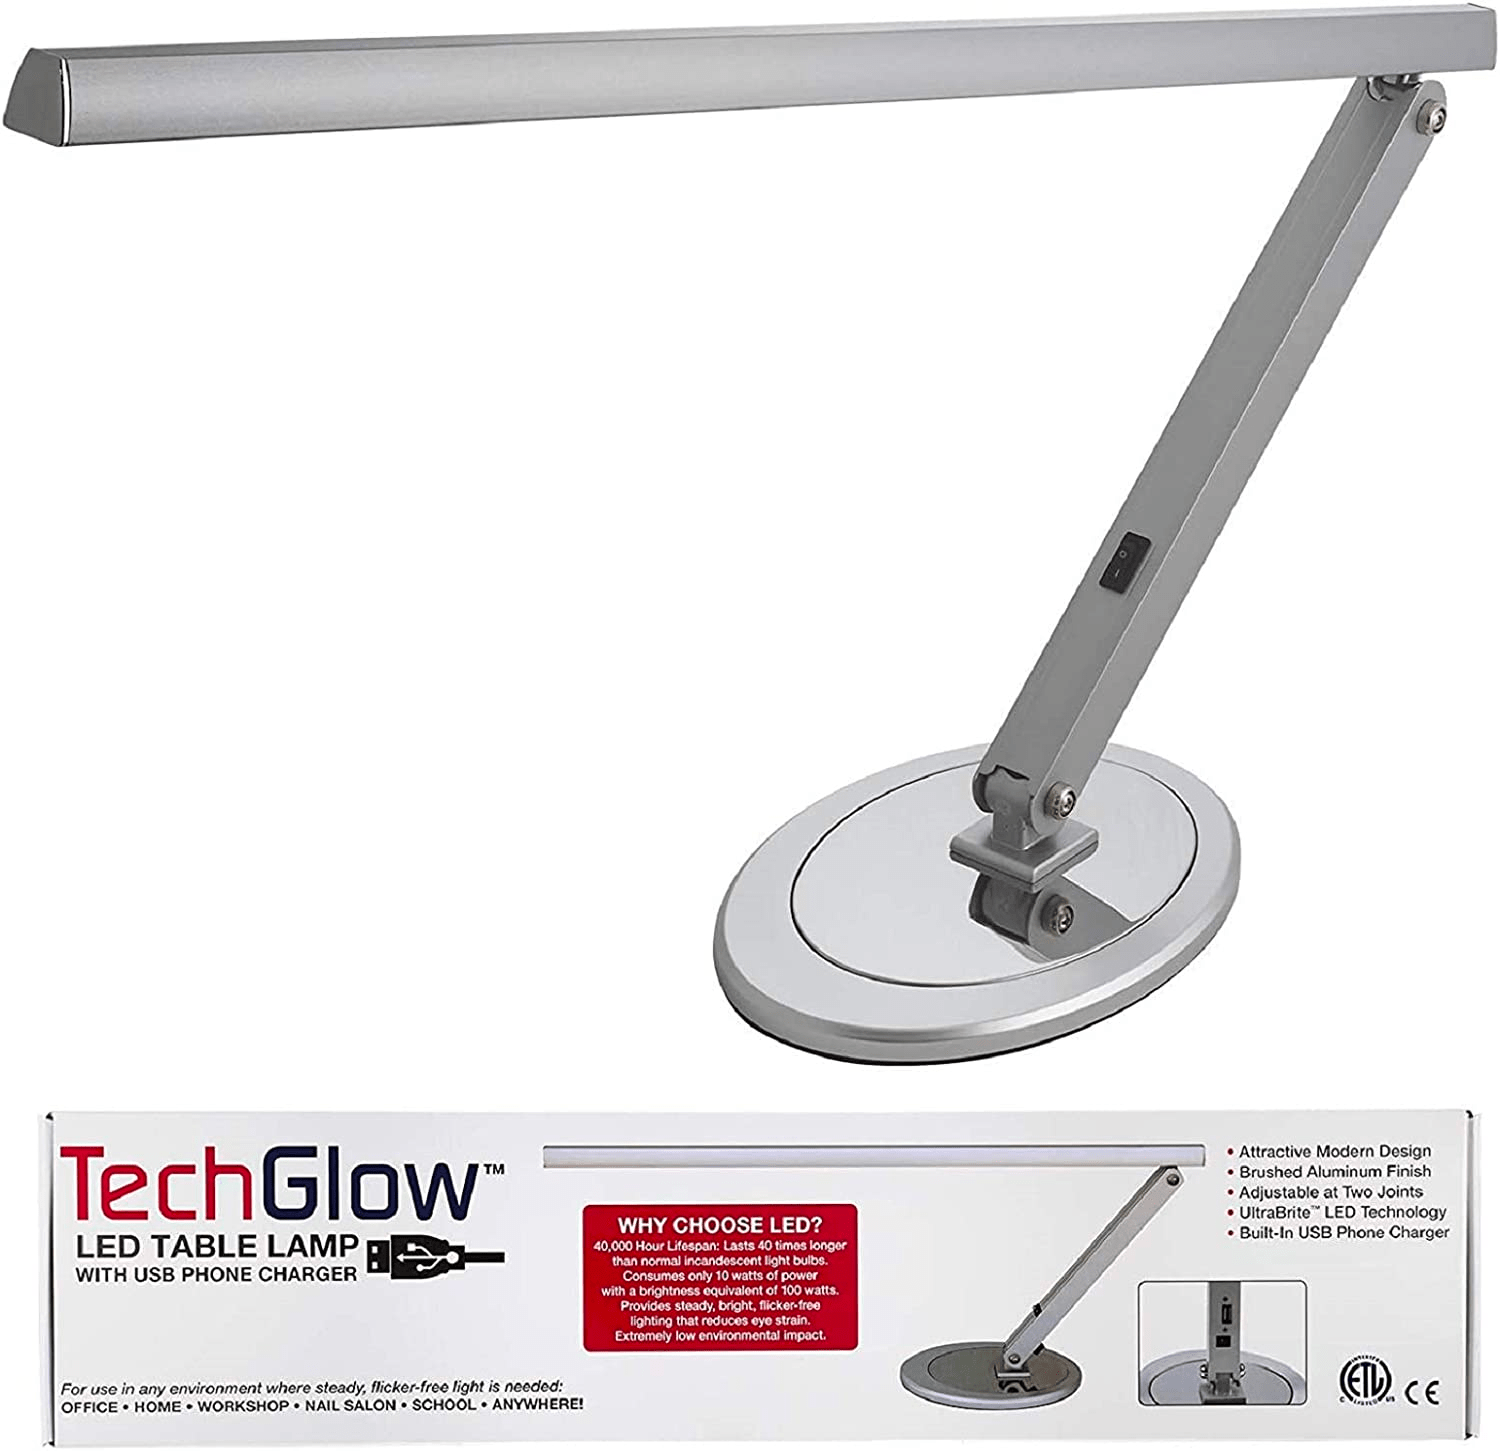 TechGlow Led Table Lamp